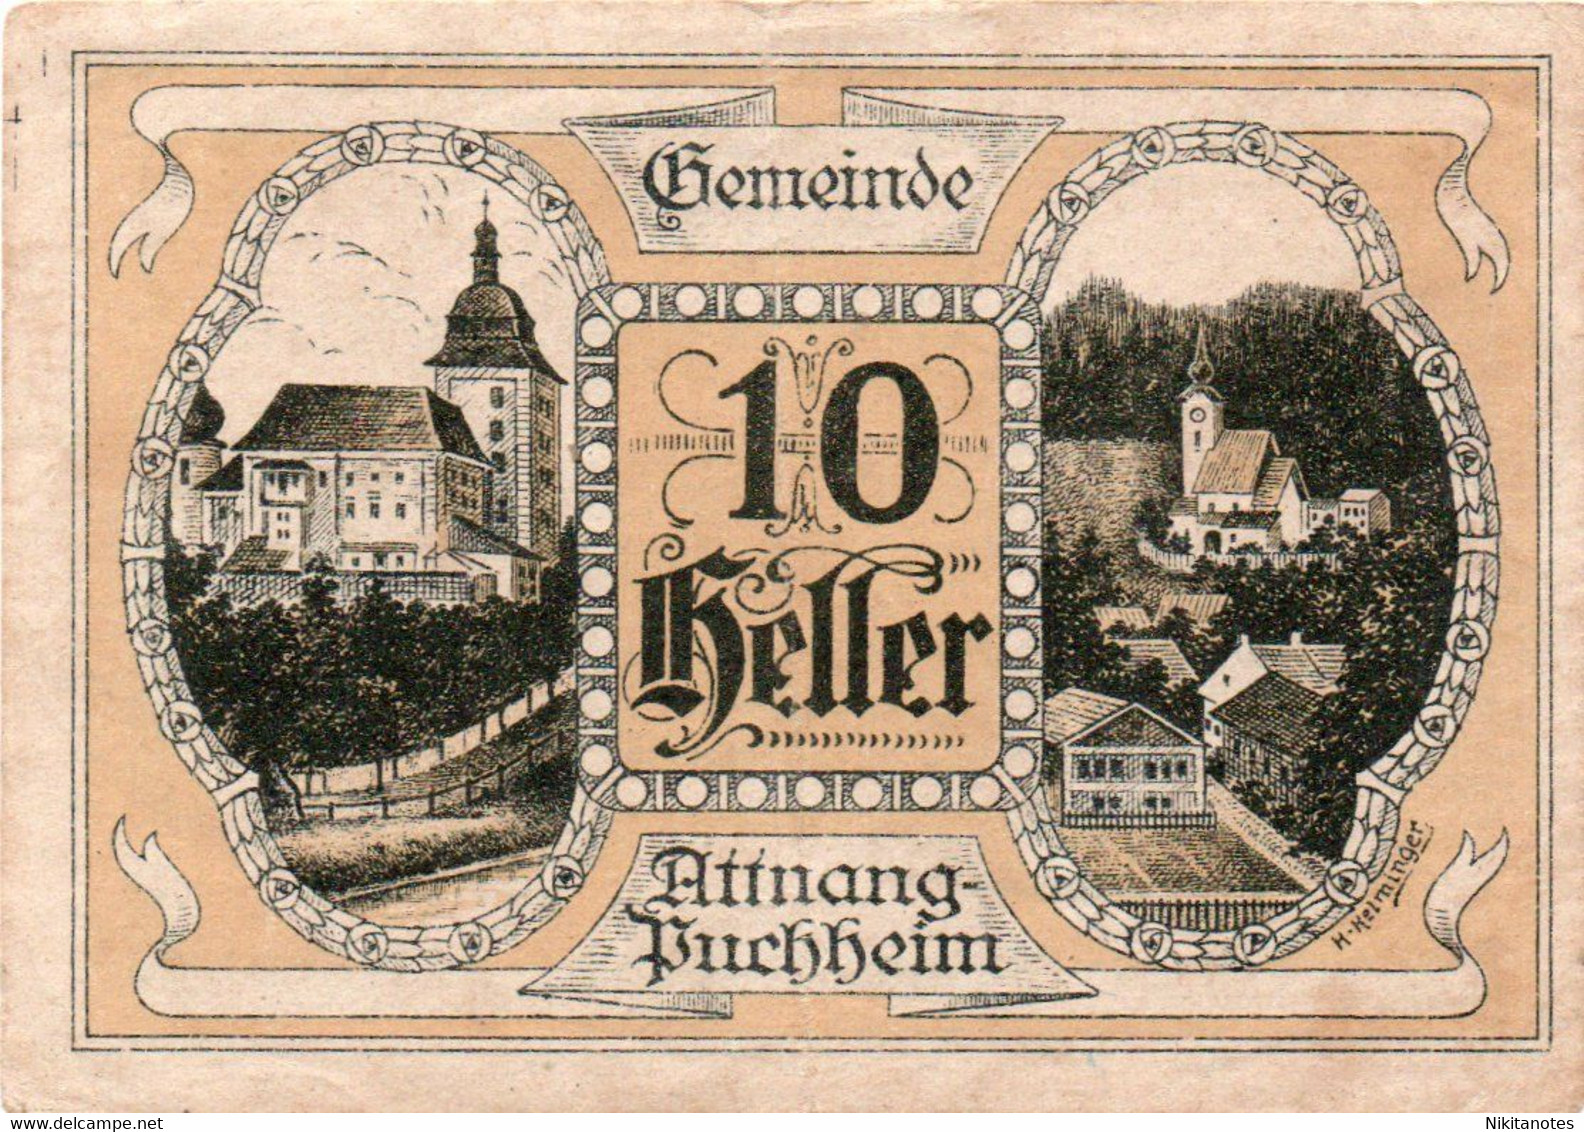 Austria Notgeld 10 Heller 1920 Attnang-Puchheim See Scan Note - Austria